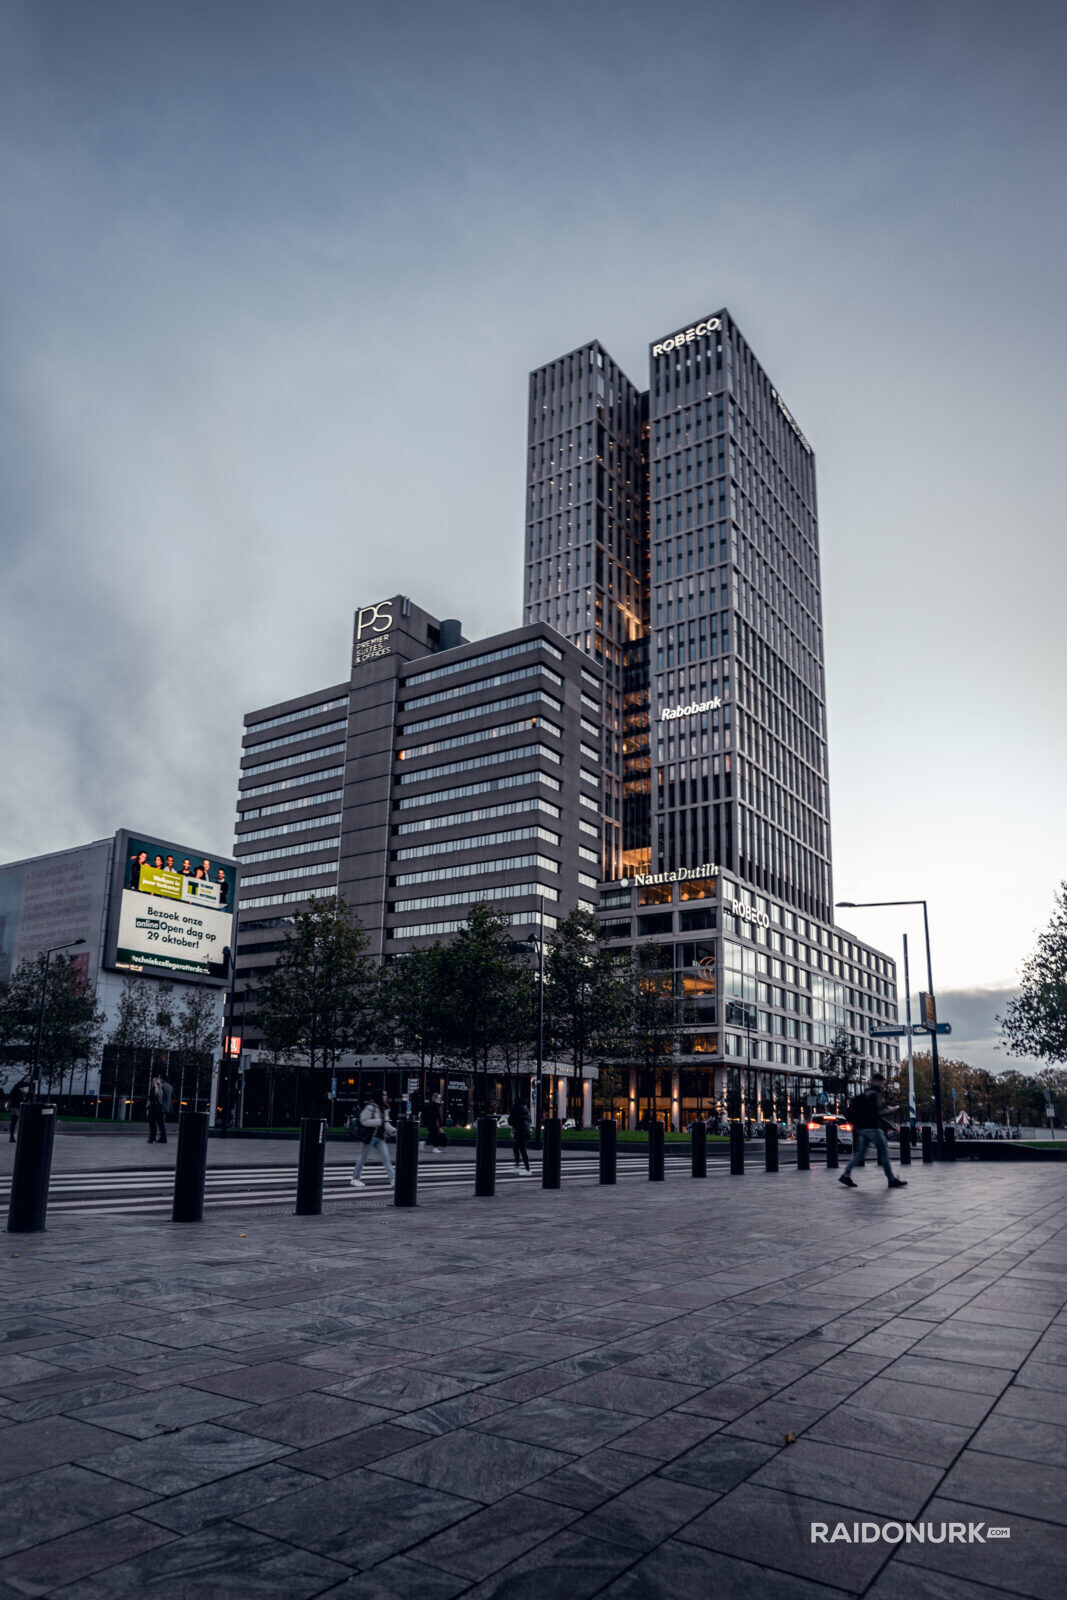 Centraal station, city, Holland, Rotterdam, Rabobank